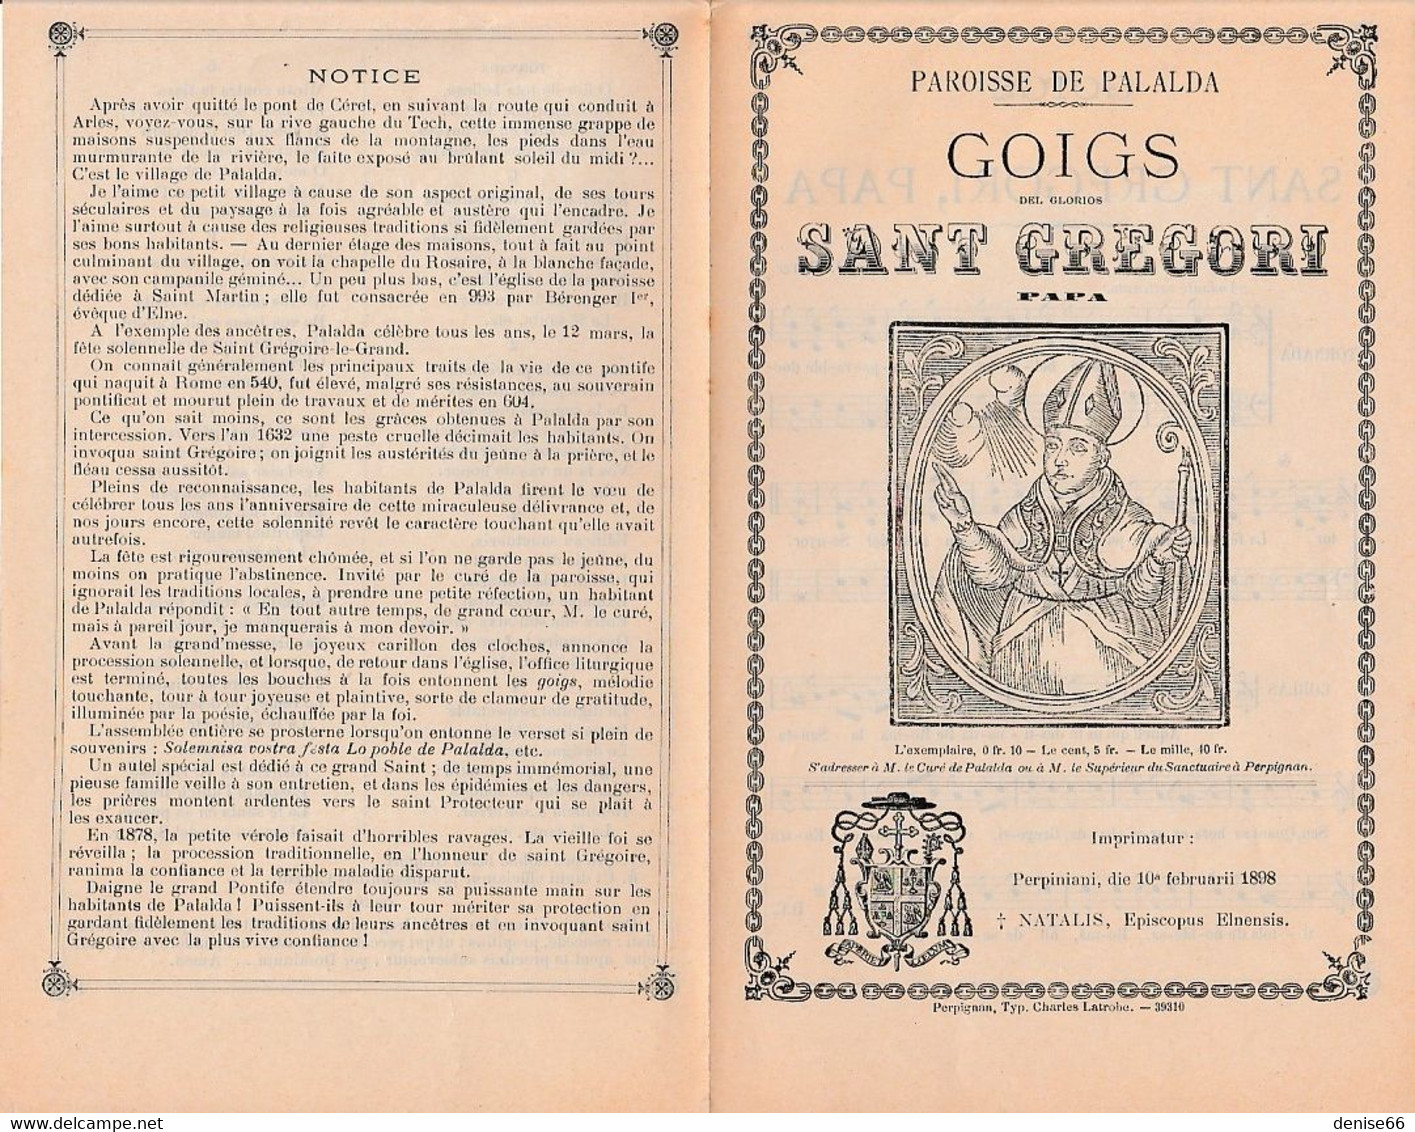 1898 GOIGS Del Glorios SANT GREGORI PAPA - PALALDA - Chant Religieux Catalan Avec Paroles Et Musique - Historische Documenten